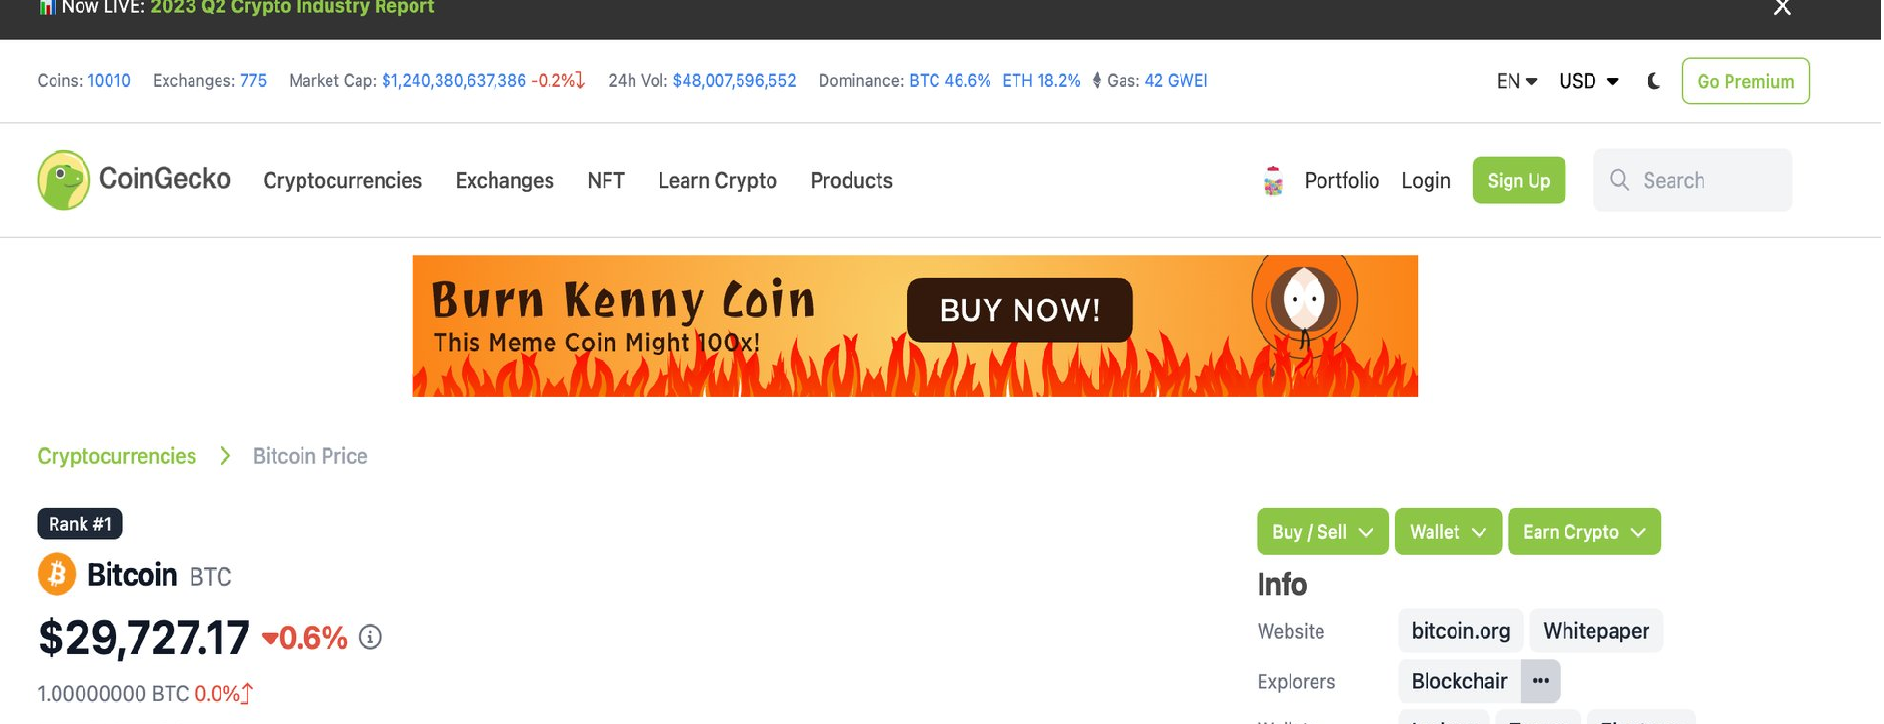 CoinGecko Advertised Burn Kenny